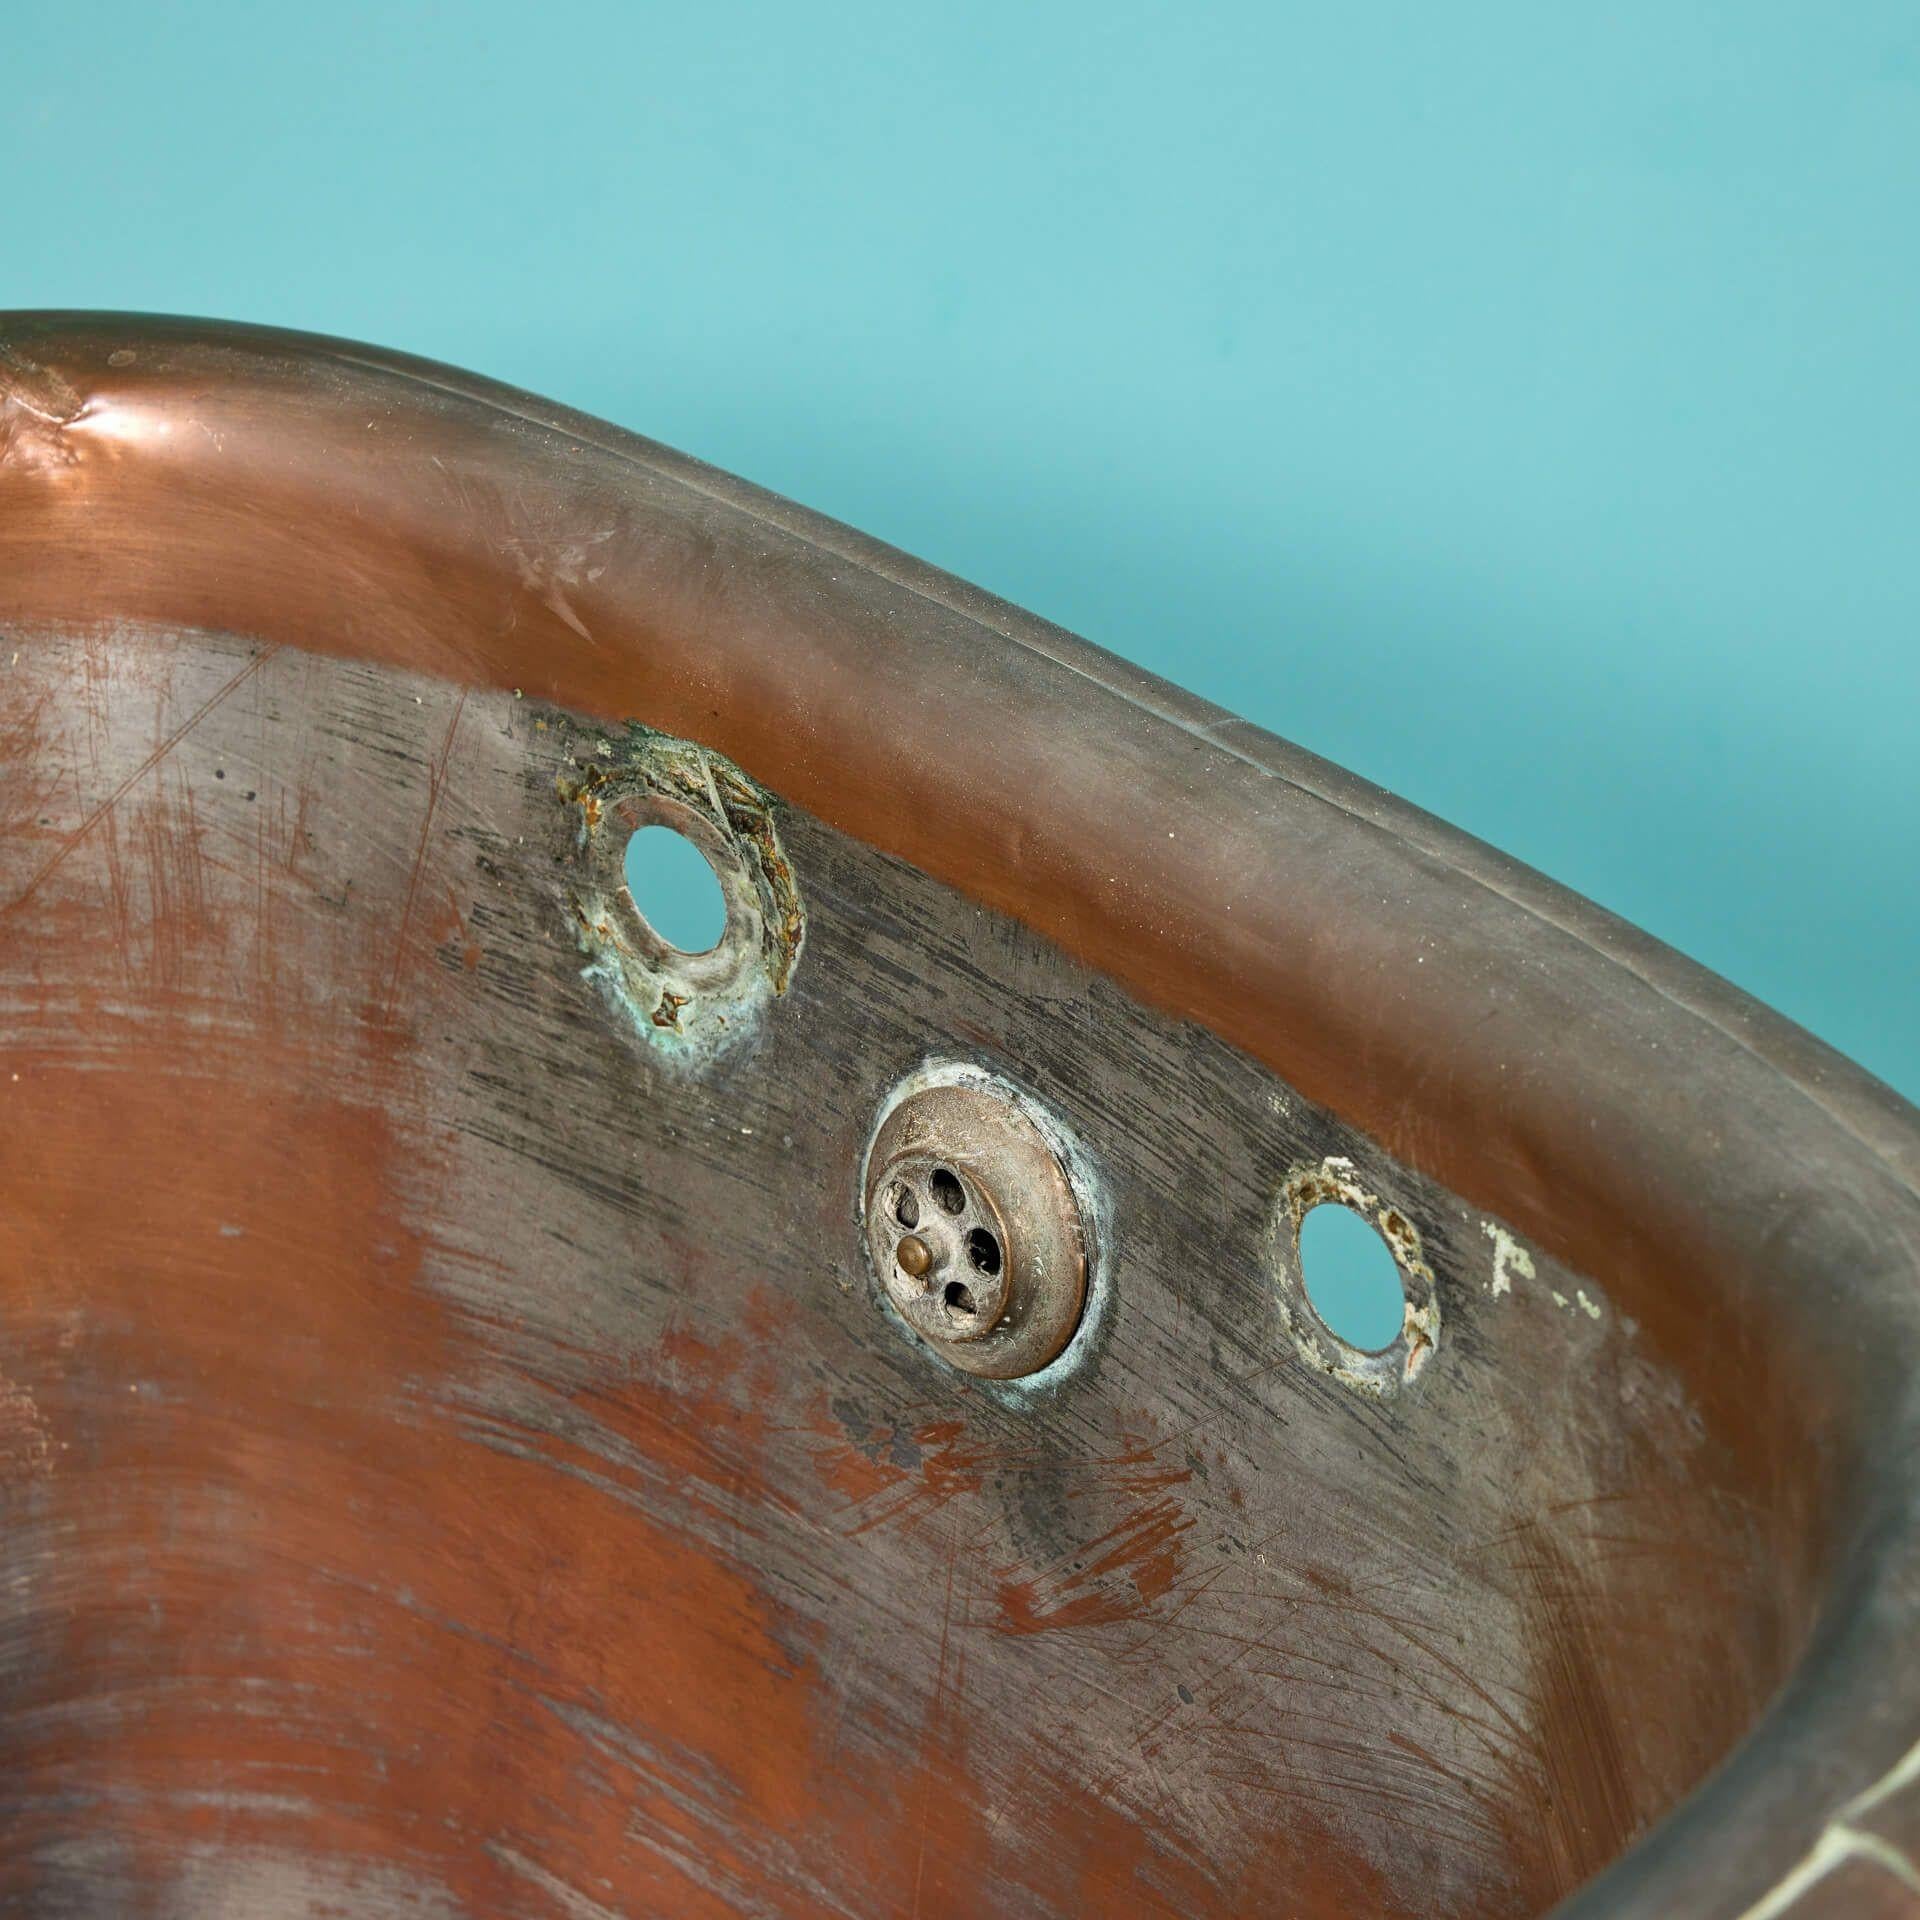 vintage copper tub